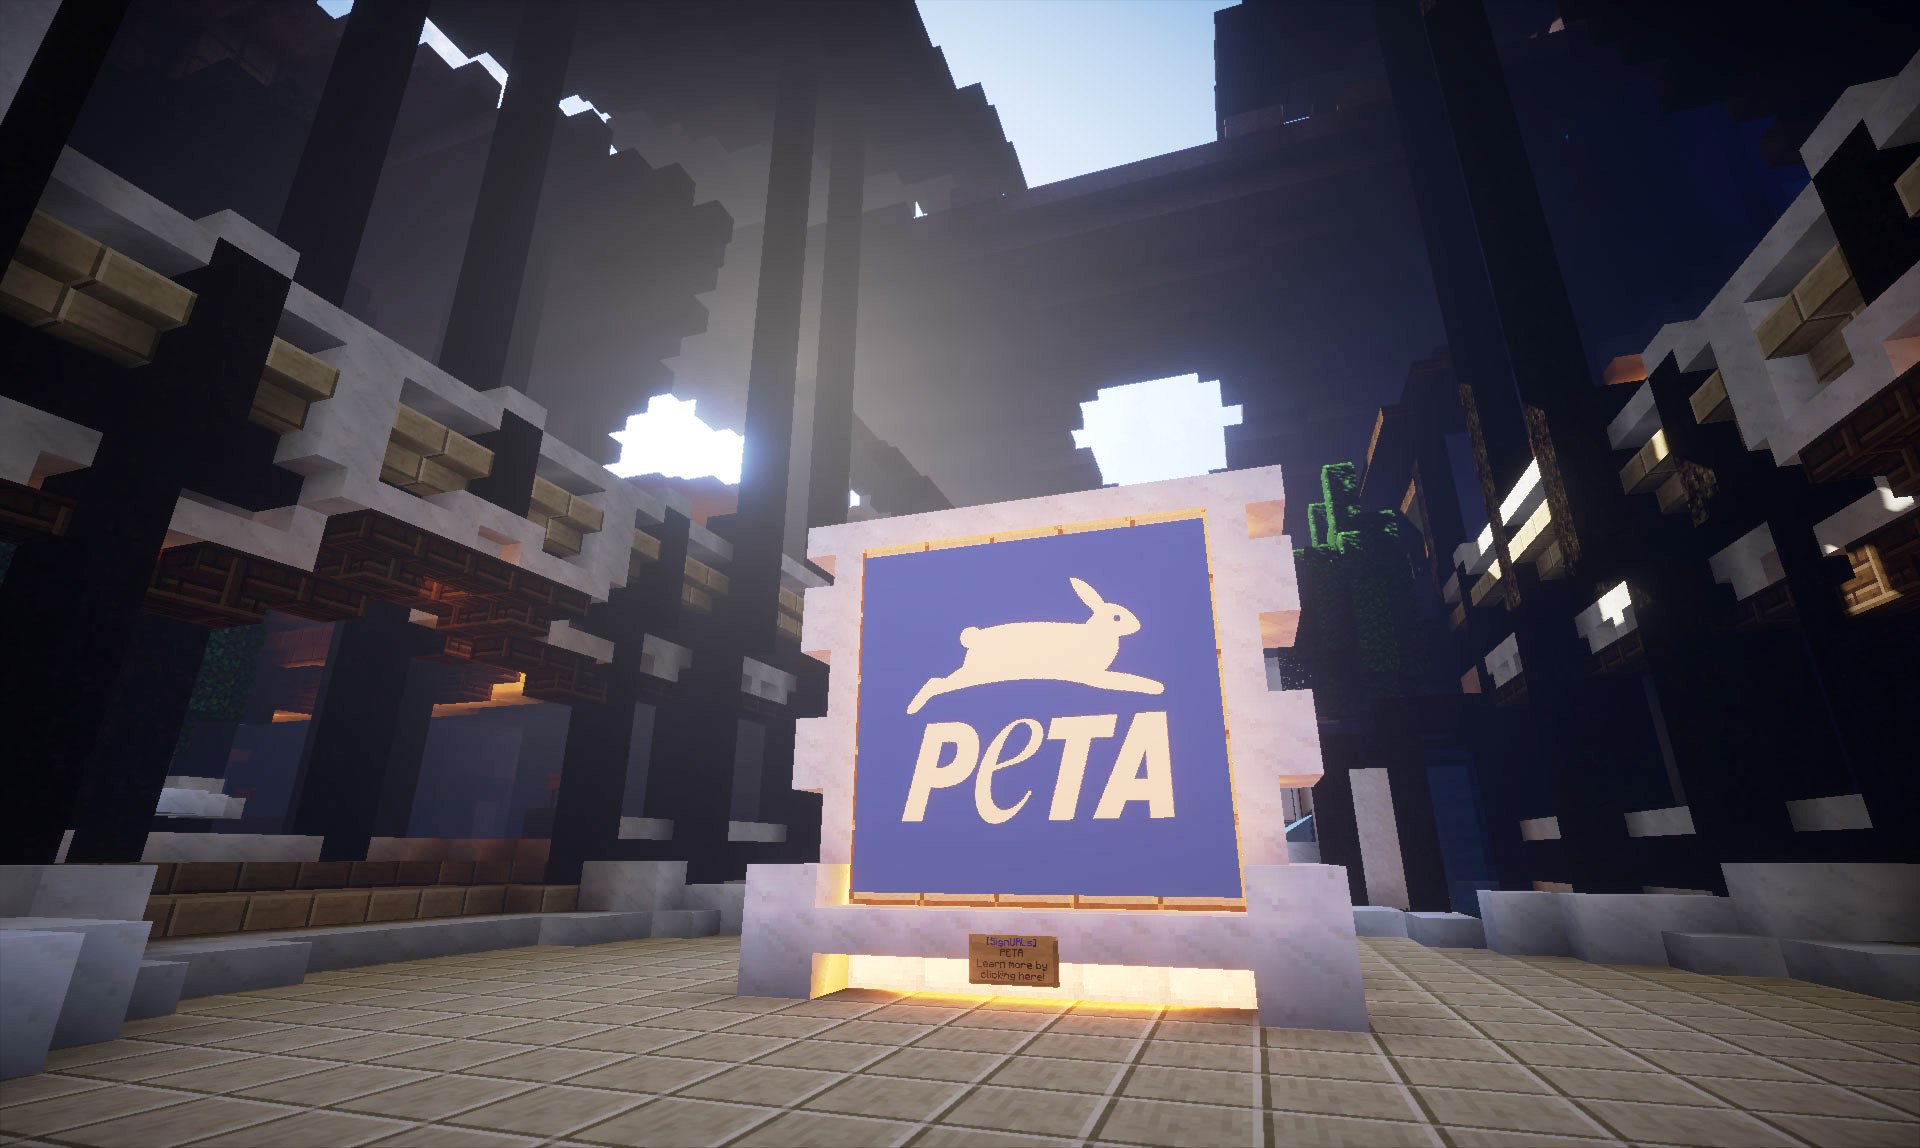 Inside the re-creation of PETA's headquarters